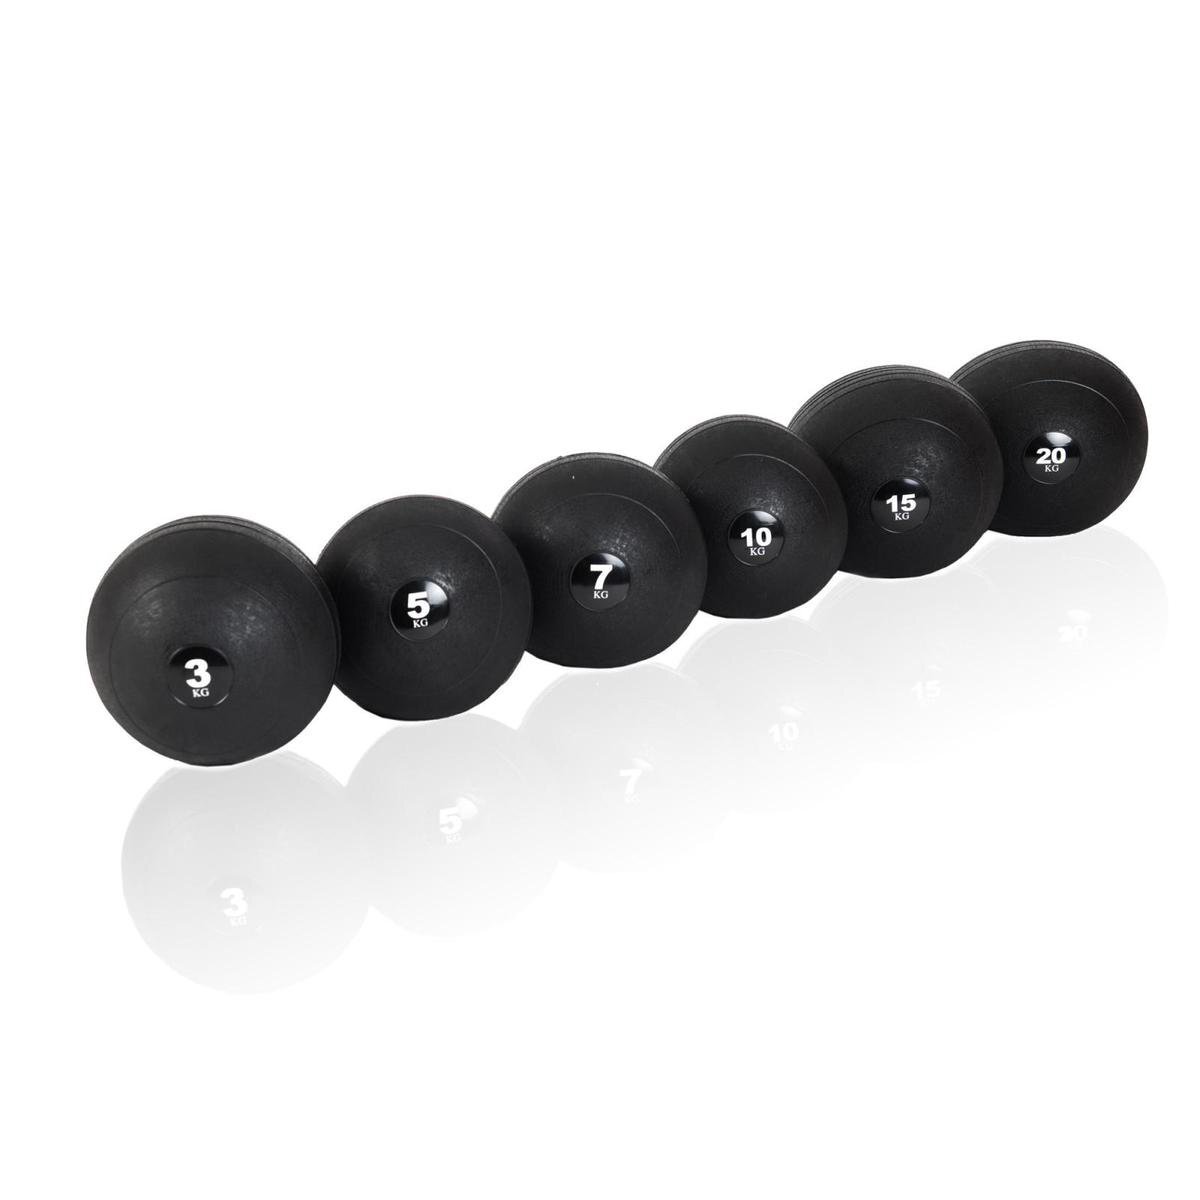 Taurus Slam Ball 15 kg - functionele training van kracht, lenigheid en uithoudingsvermogen